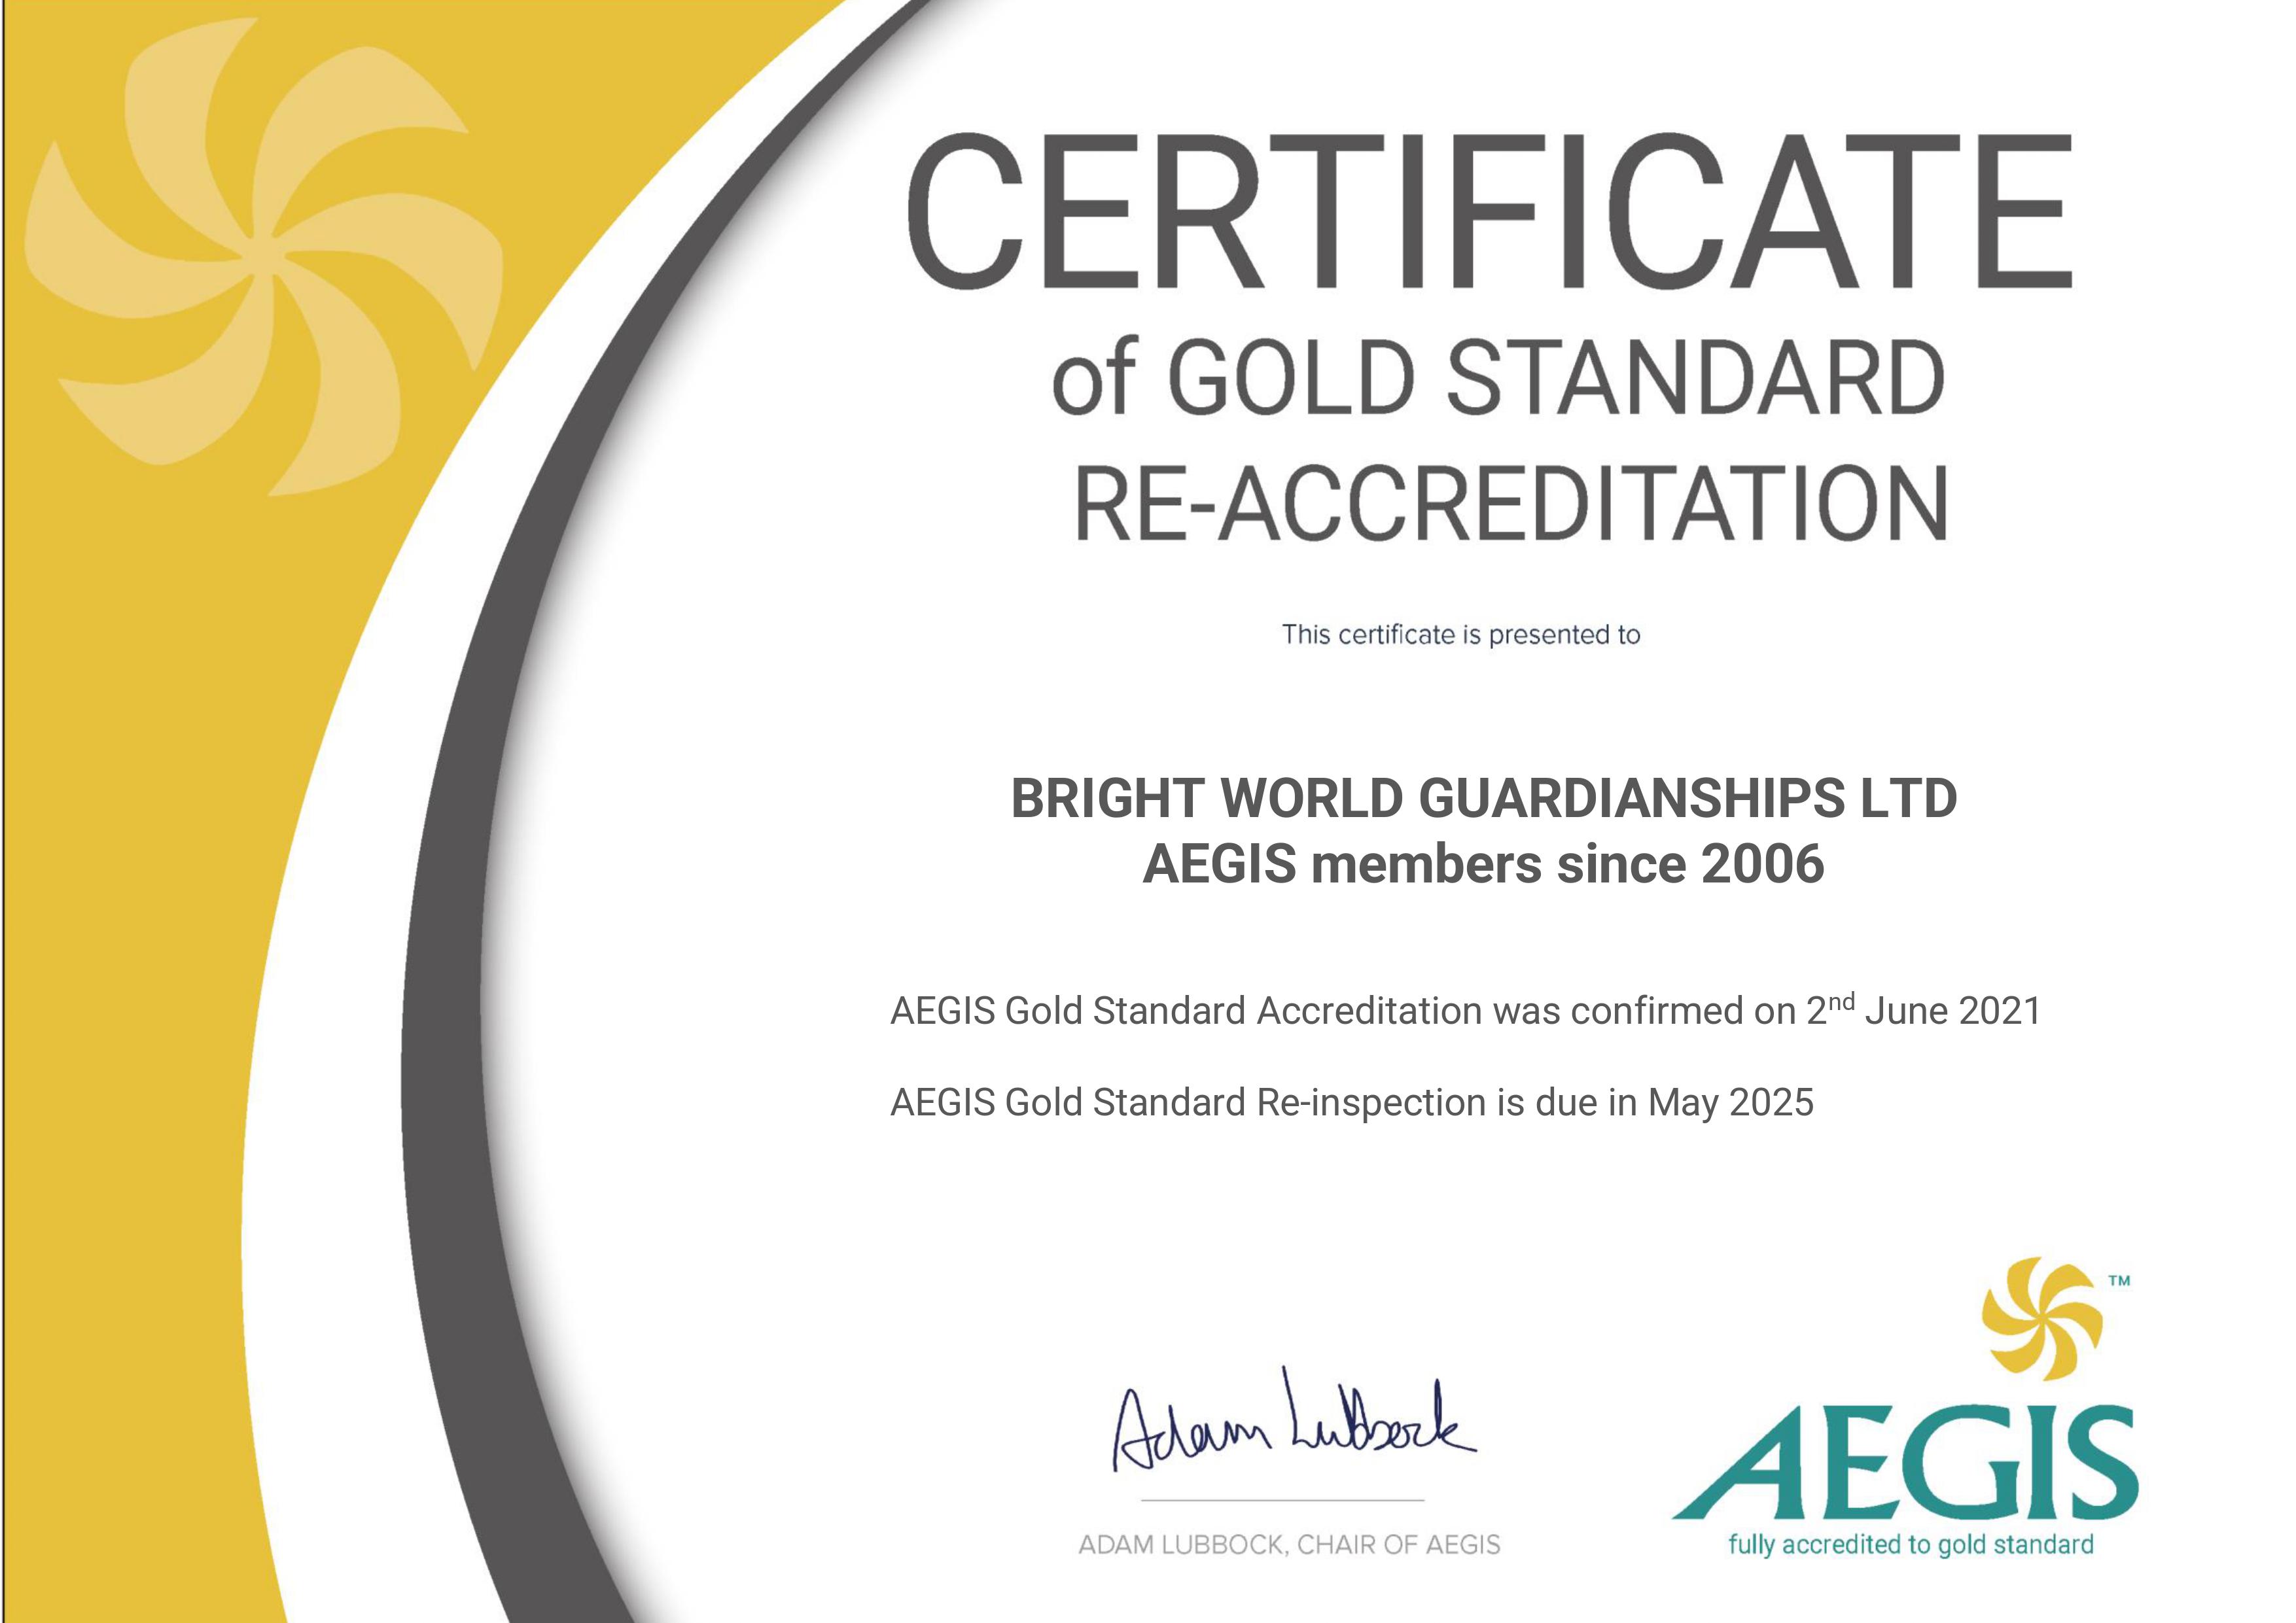 Bright World AEGIS Gold standrd re-accreditation certificate 2021